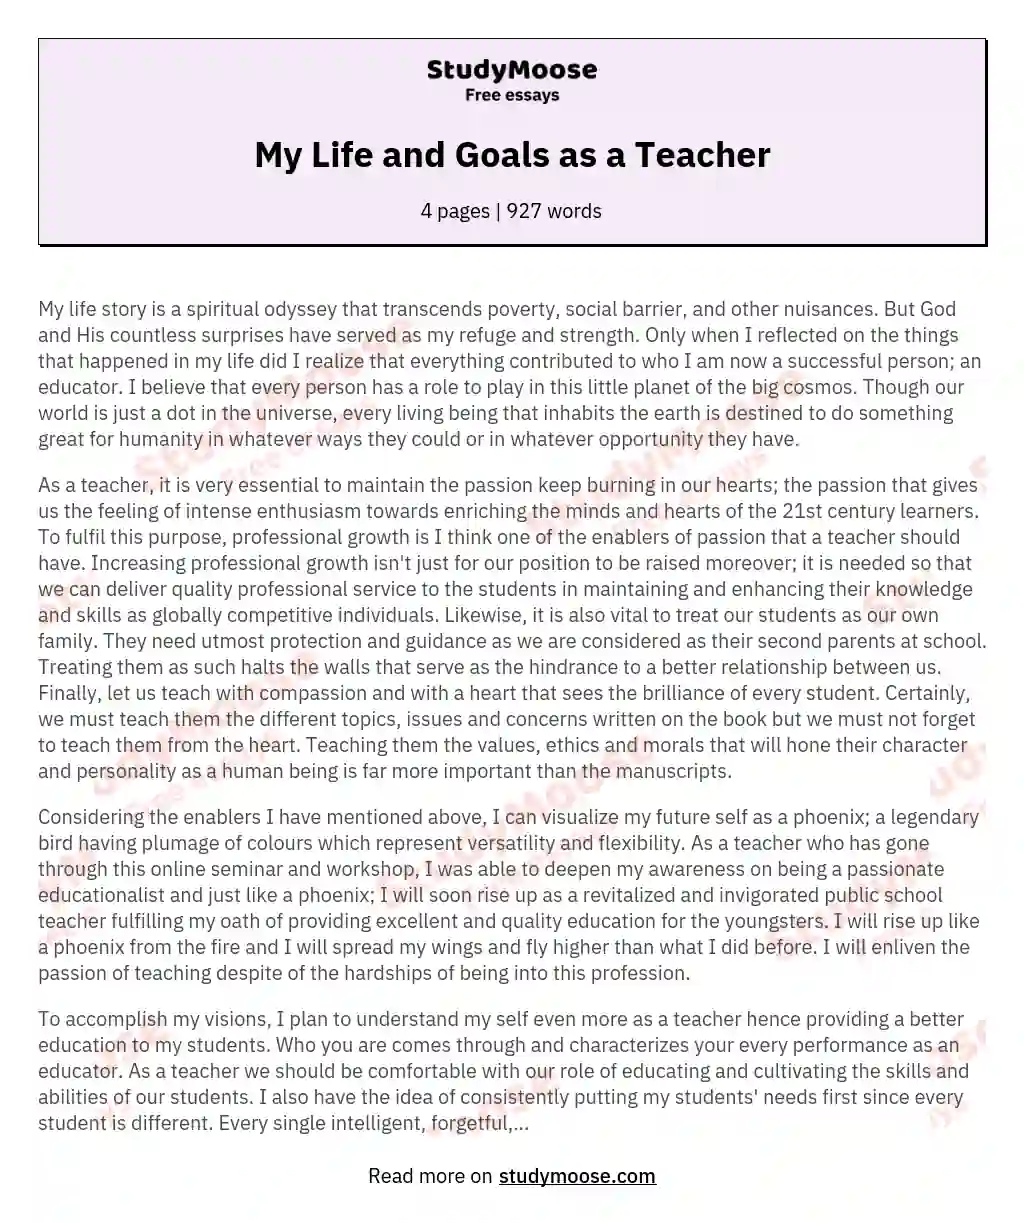 My Life and Goals as a Teacher essay